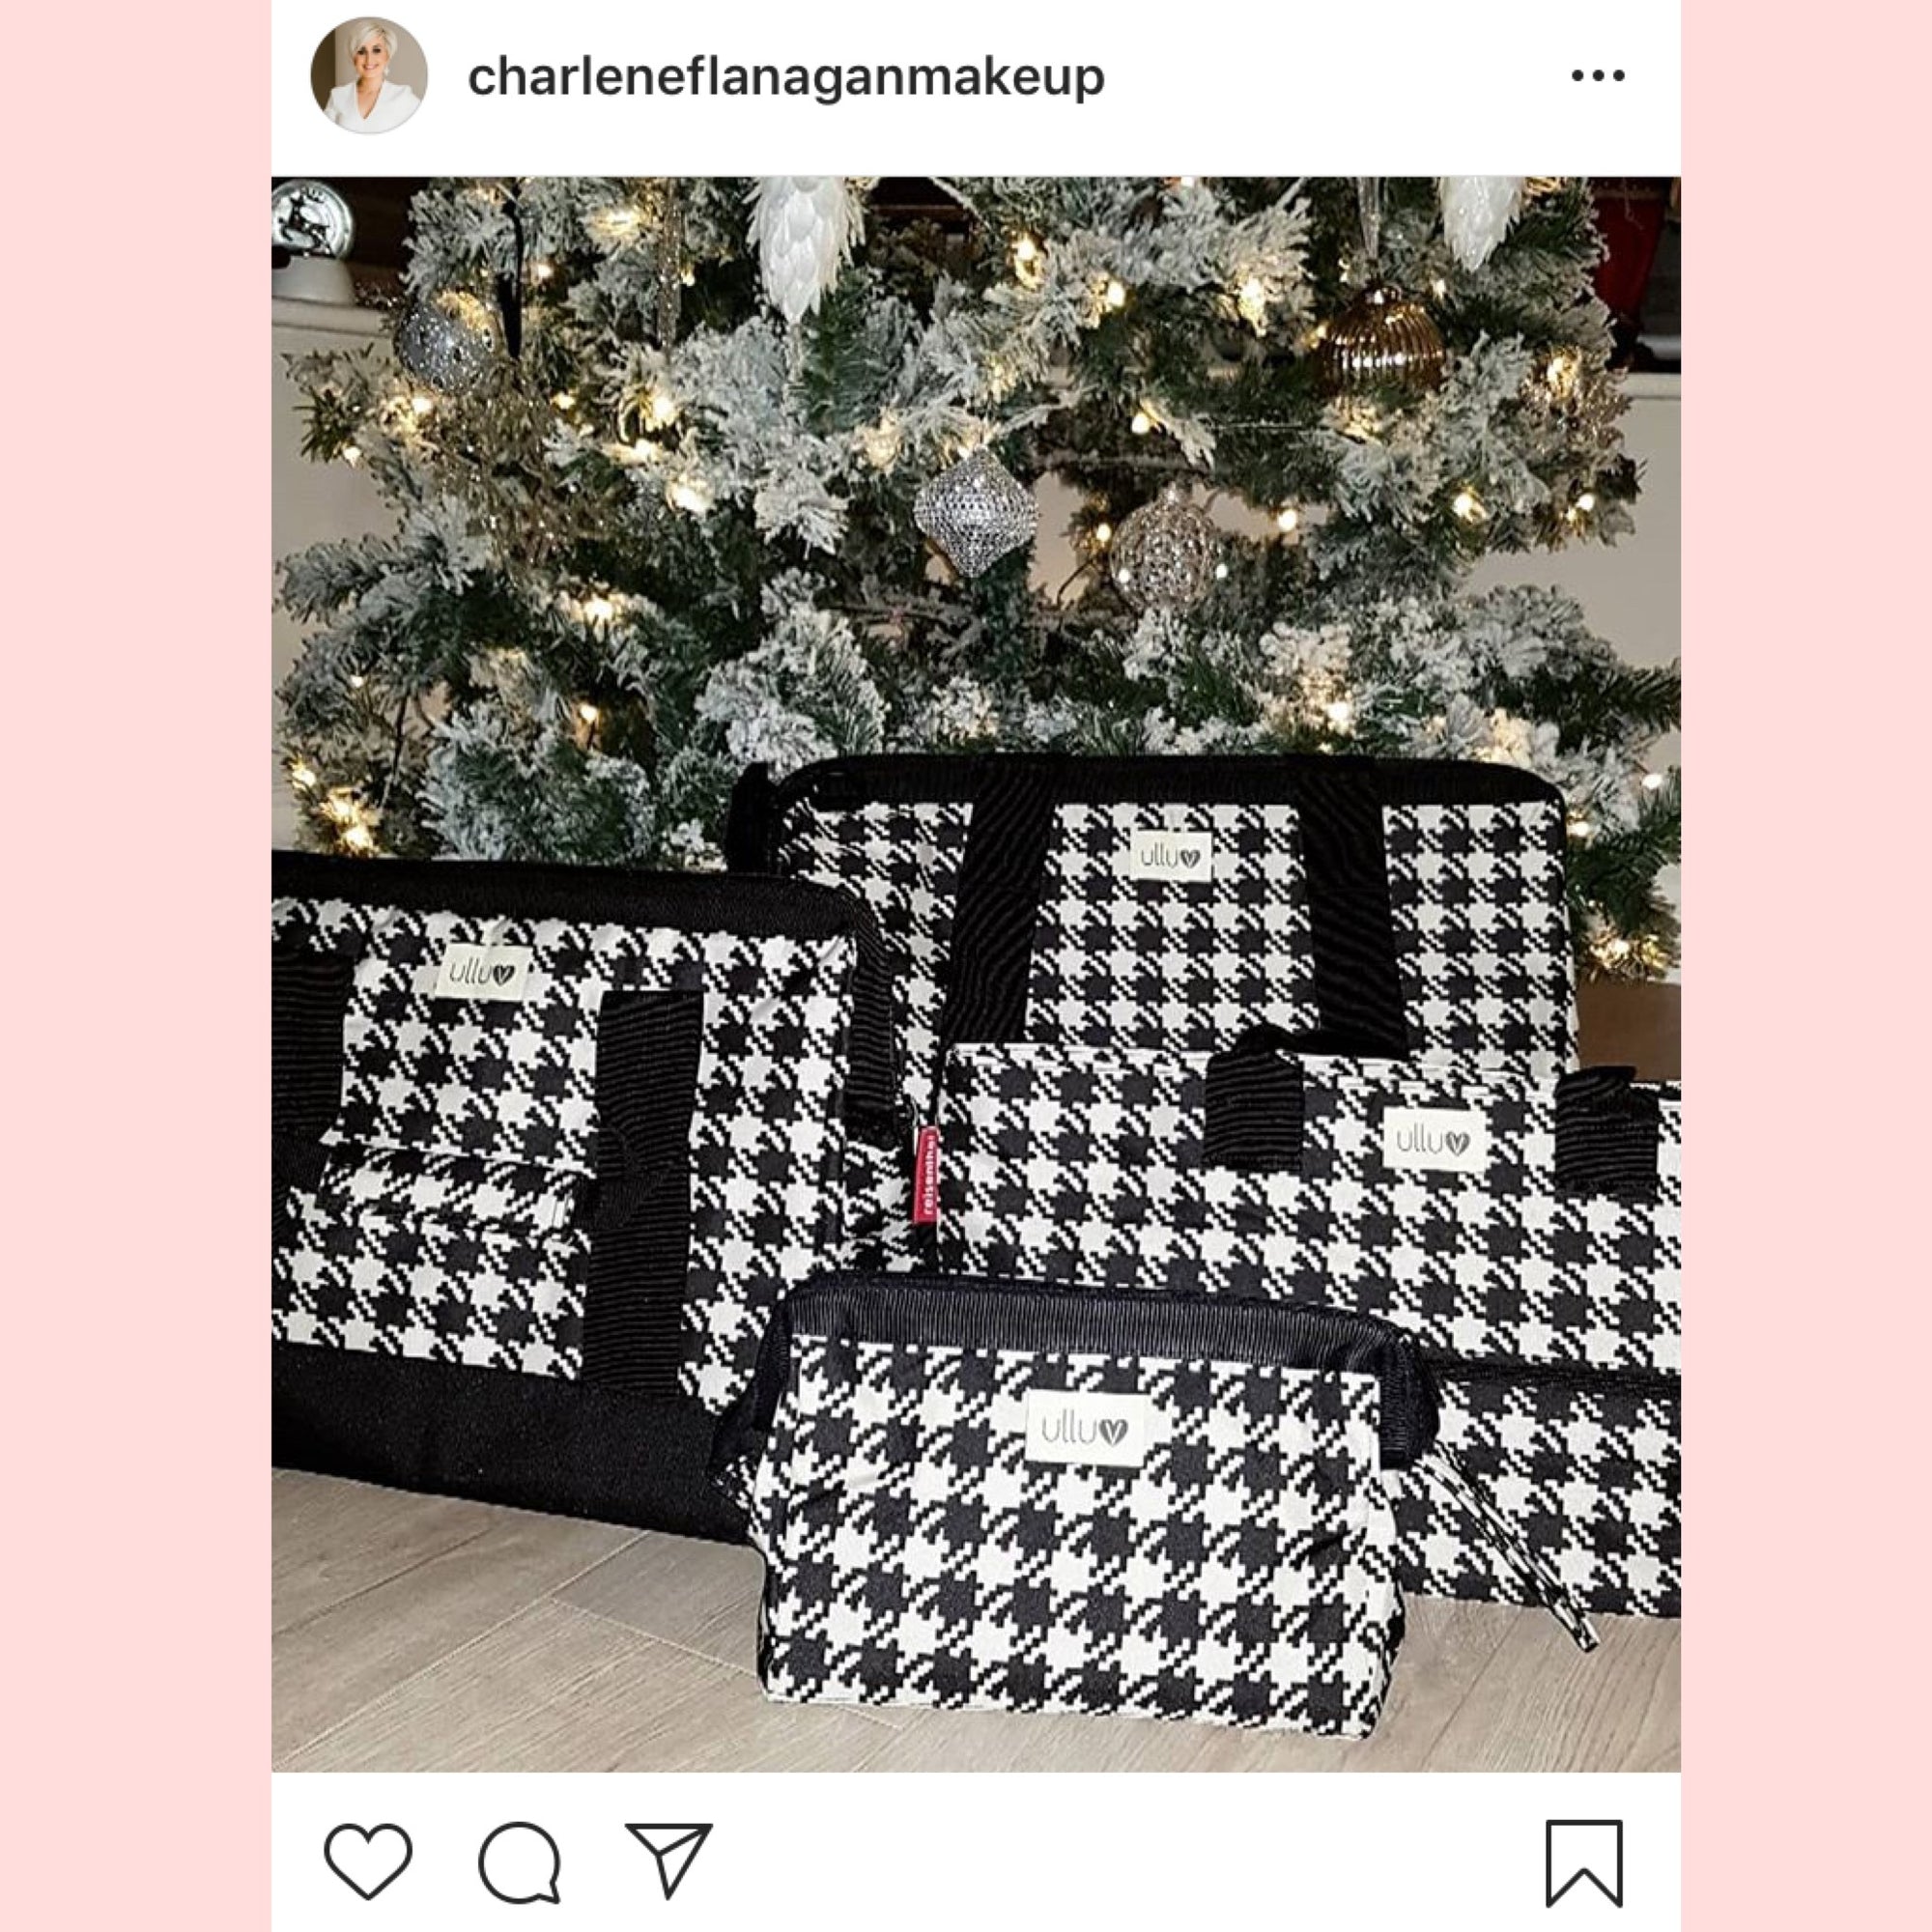 Charlene Flanagan loves her Fifties Black bags